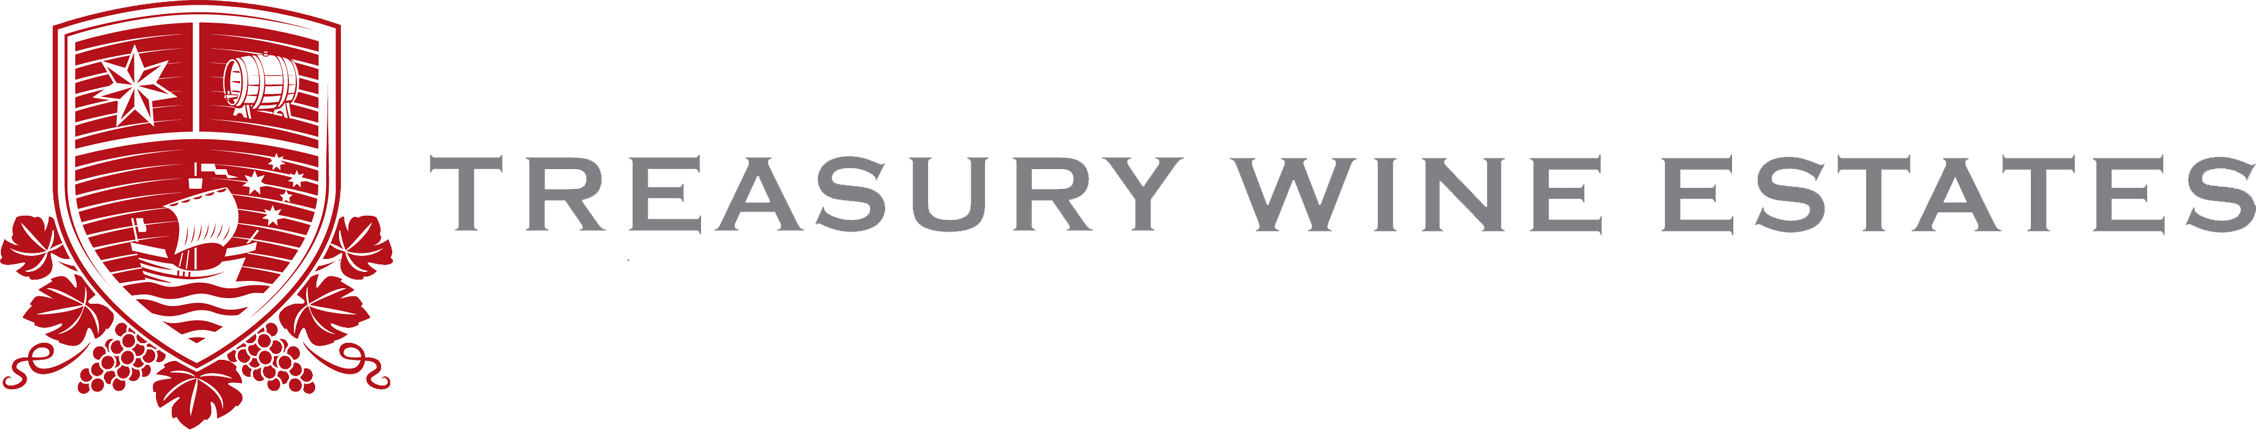 Treasury Wine Estates Limited Logo